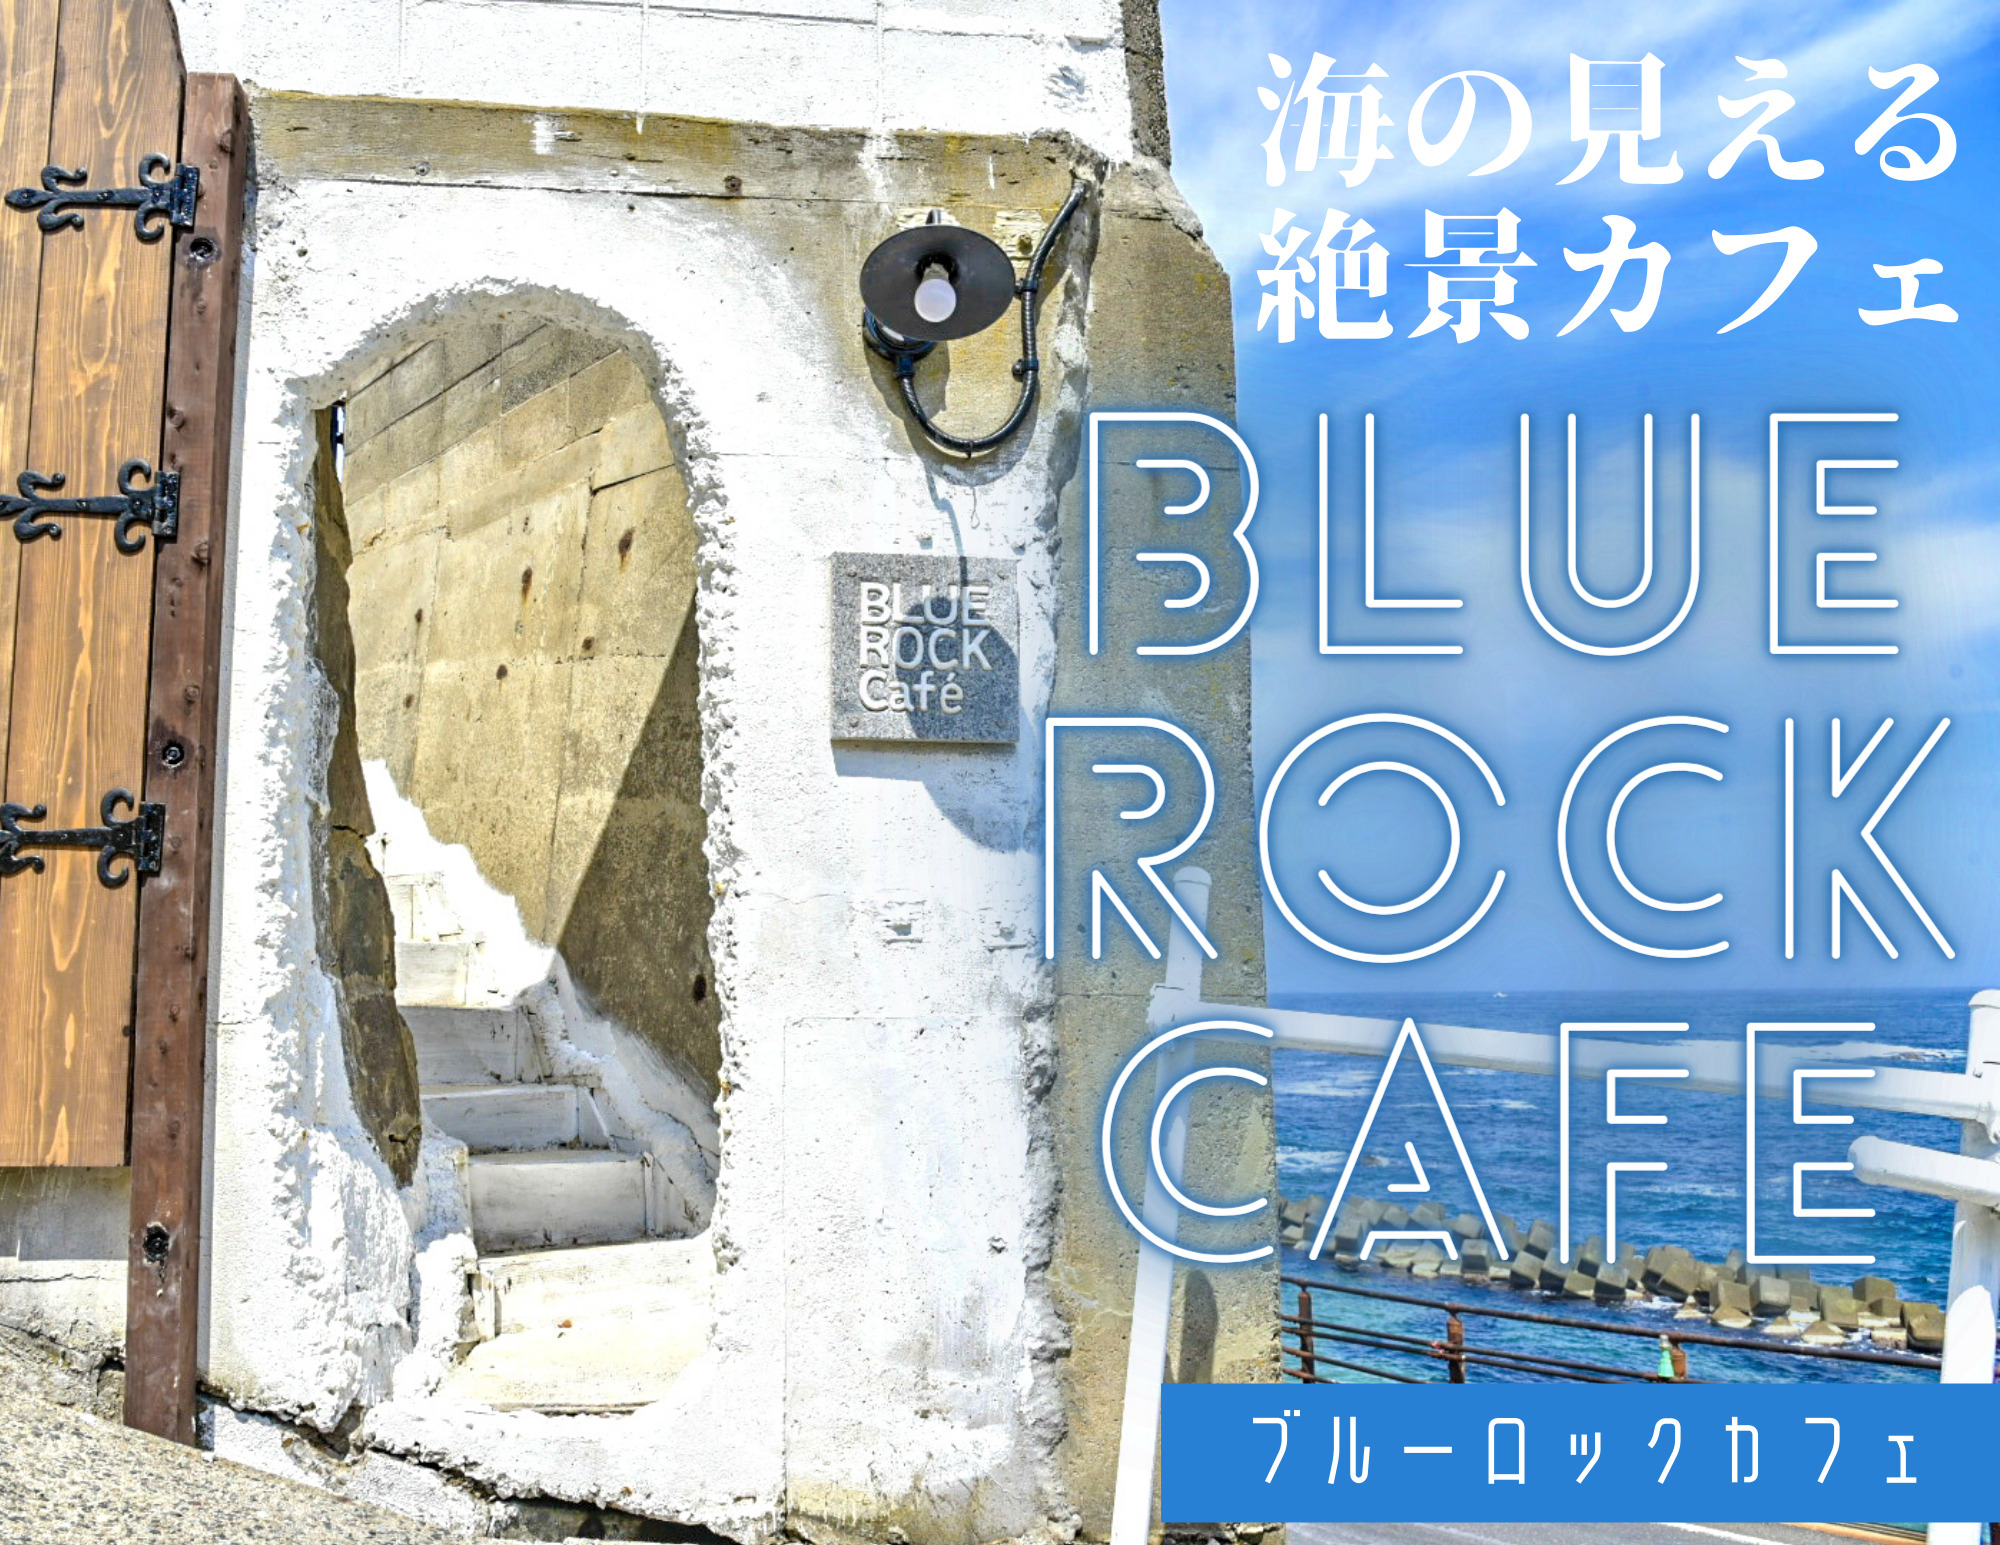 Blue Rock Cafe ブルーロックカフェ 間人に新オープン 海と立岩を眺めながらランチやカクテルが楽しめるお洒落カフェ 京丹後市 奥京都ぱんだ